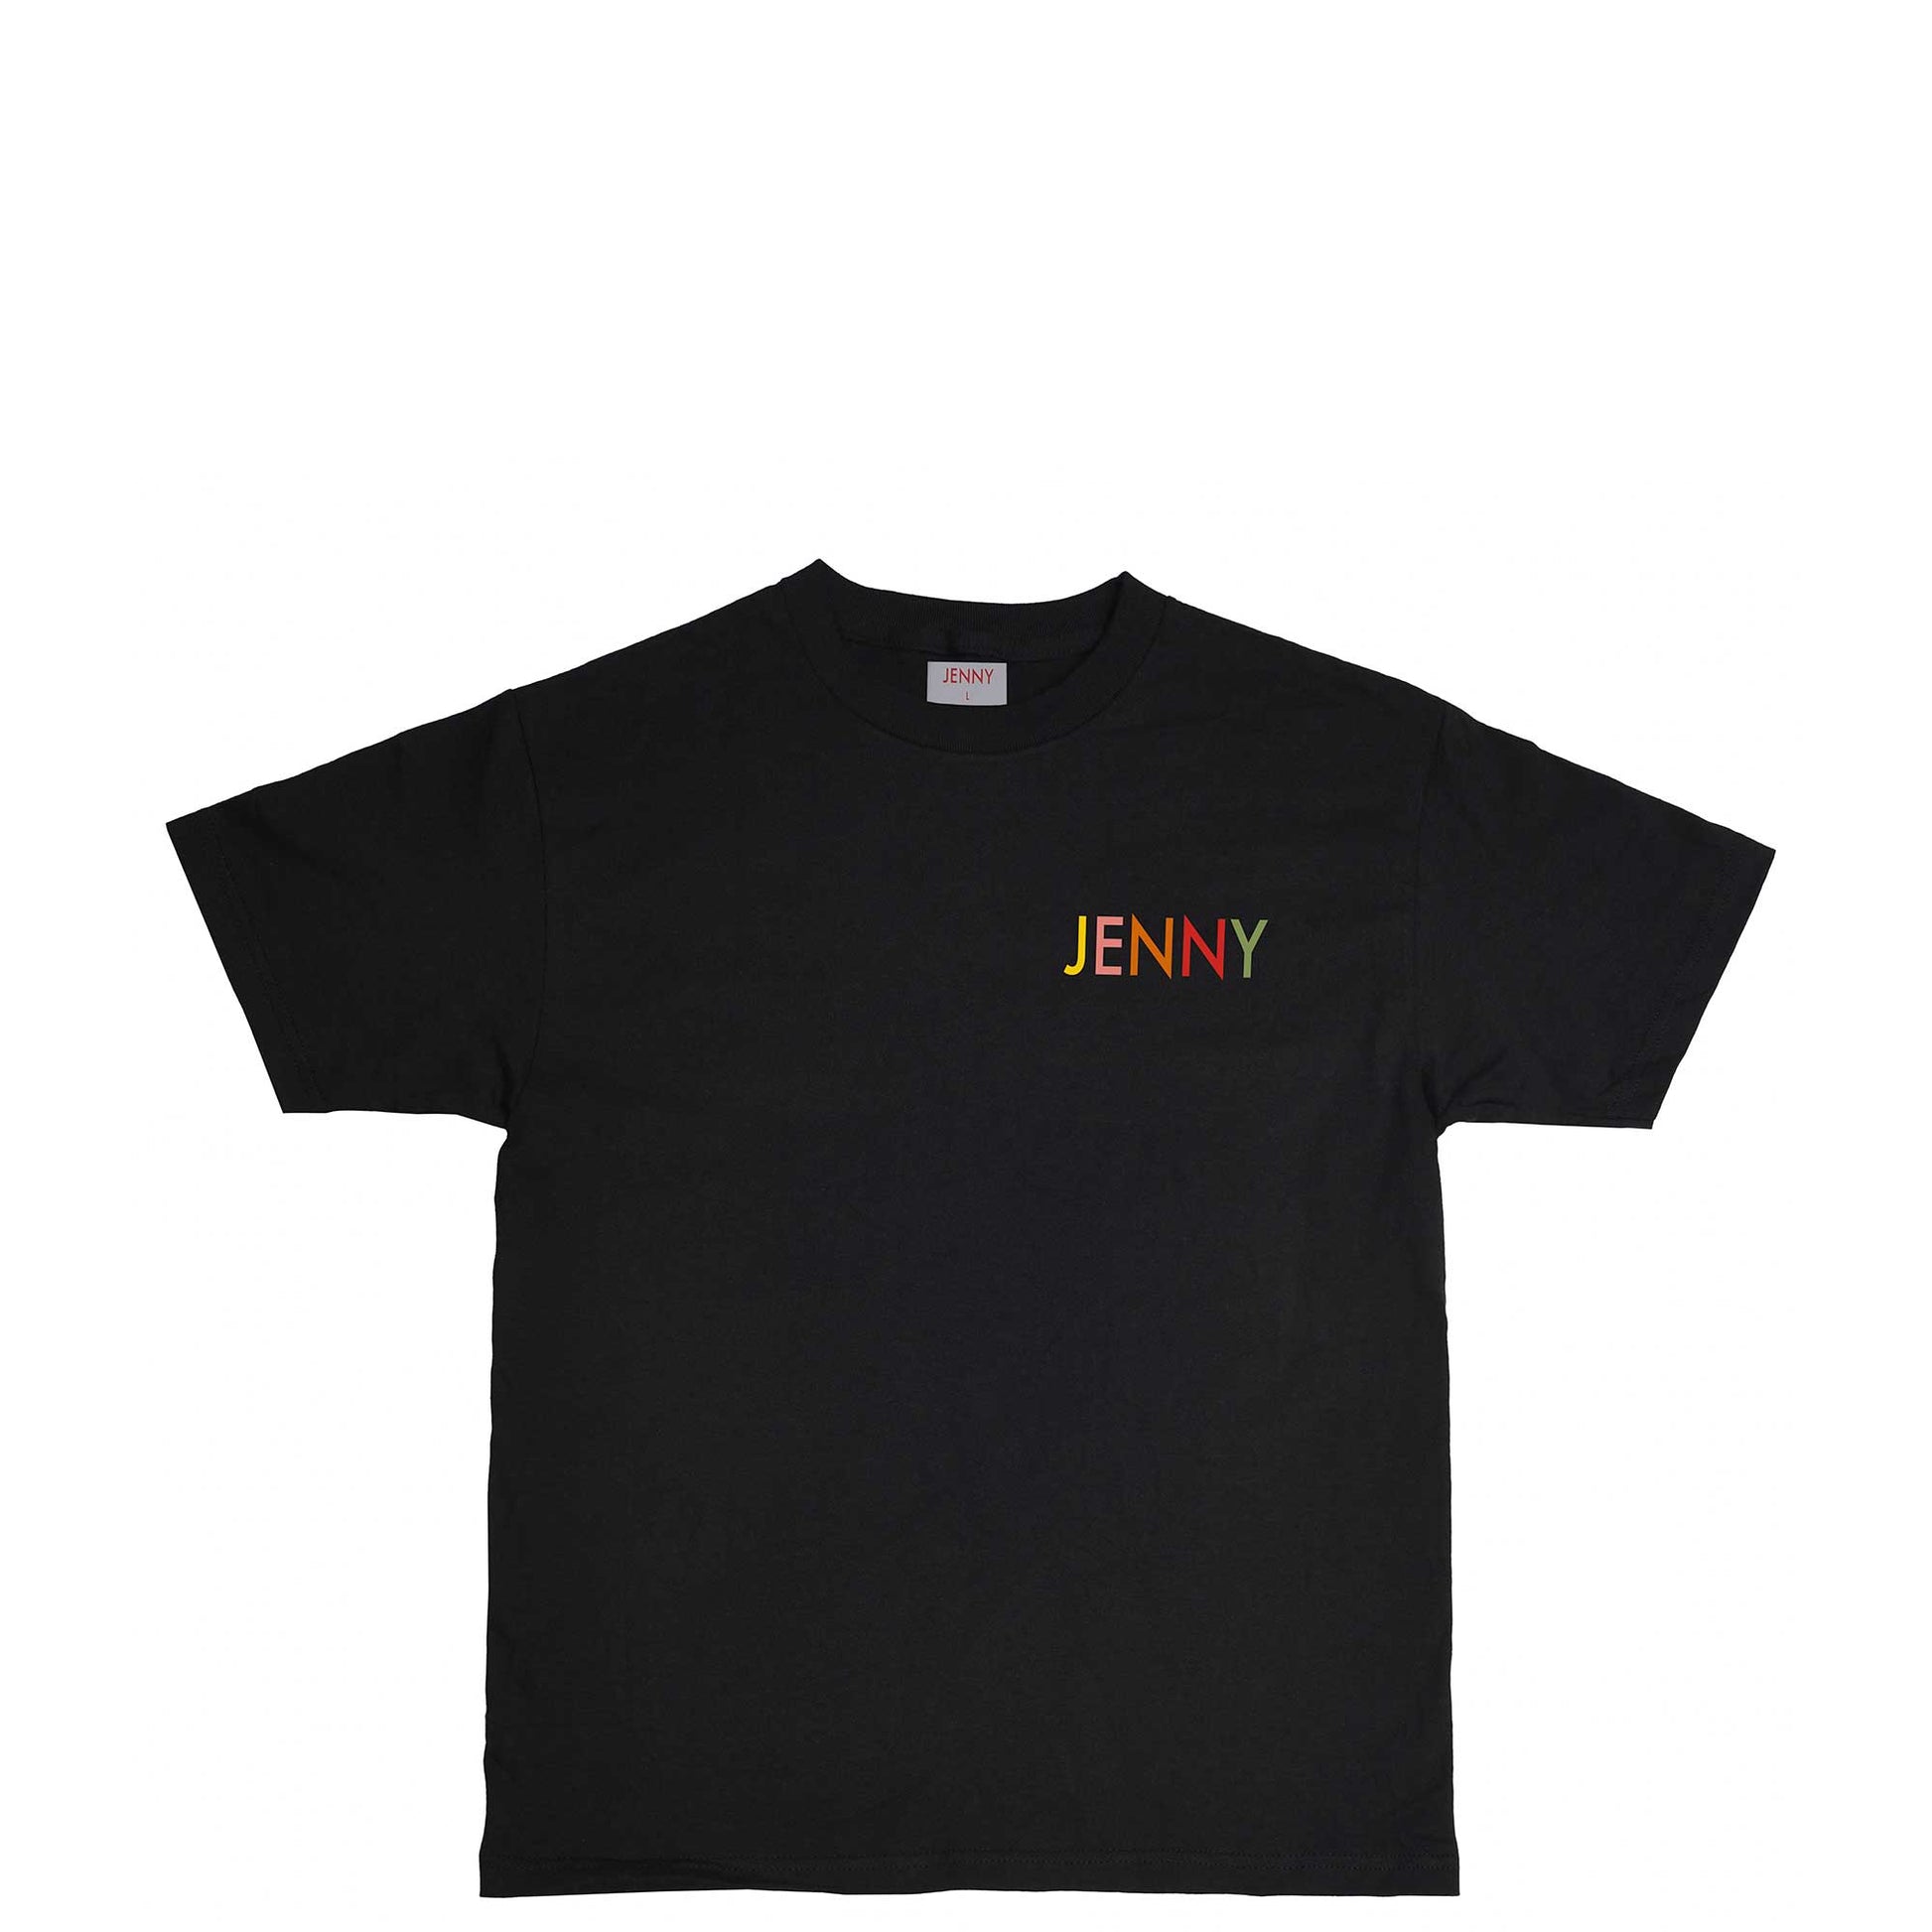 Jenny Flower Snek T-Shirt, black - Tiki Room Skateboards - 2